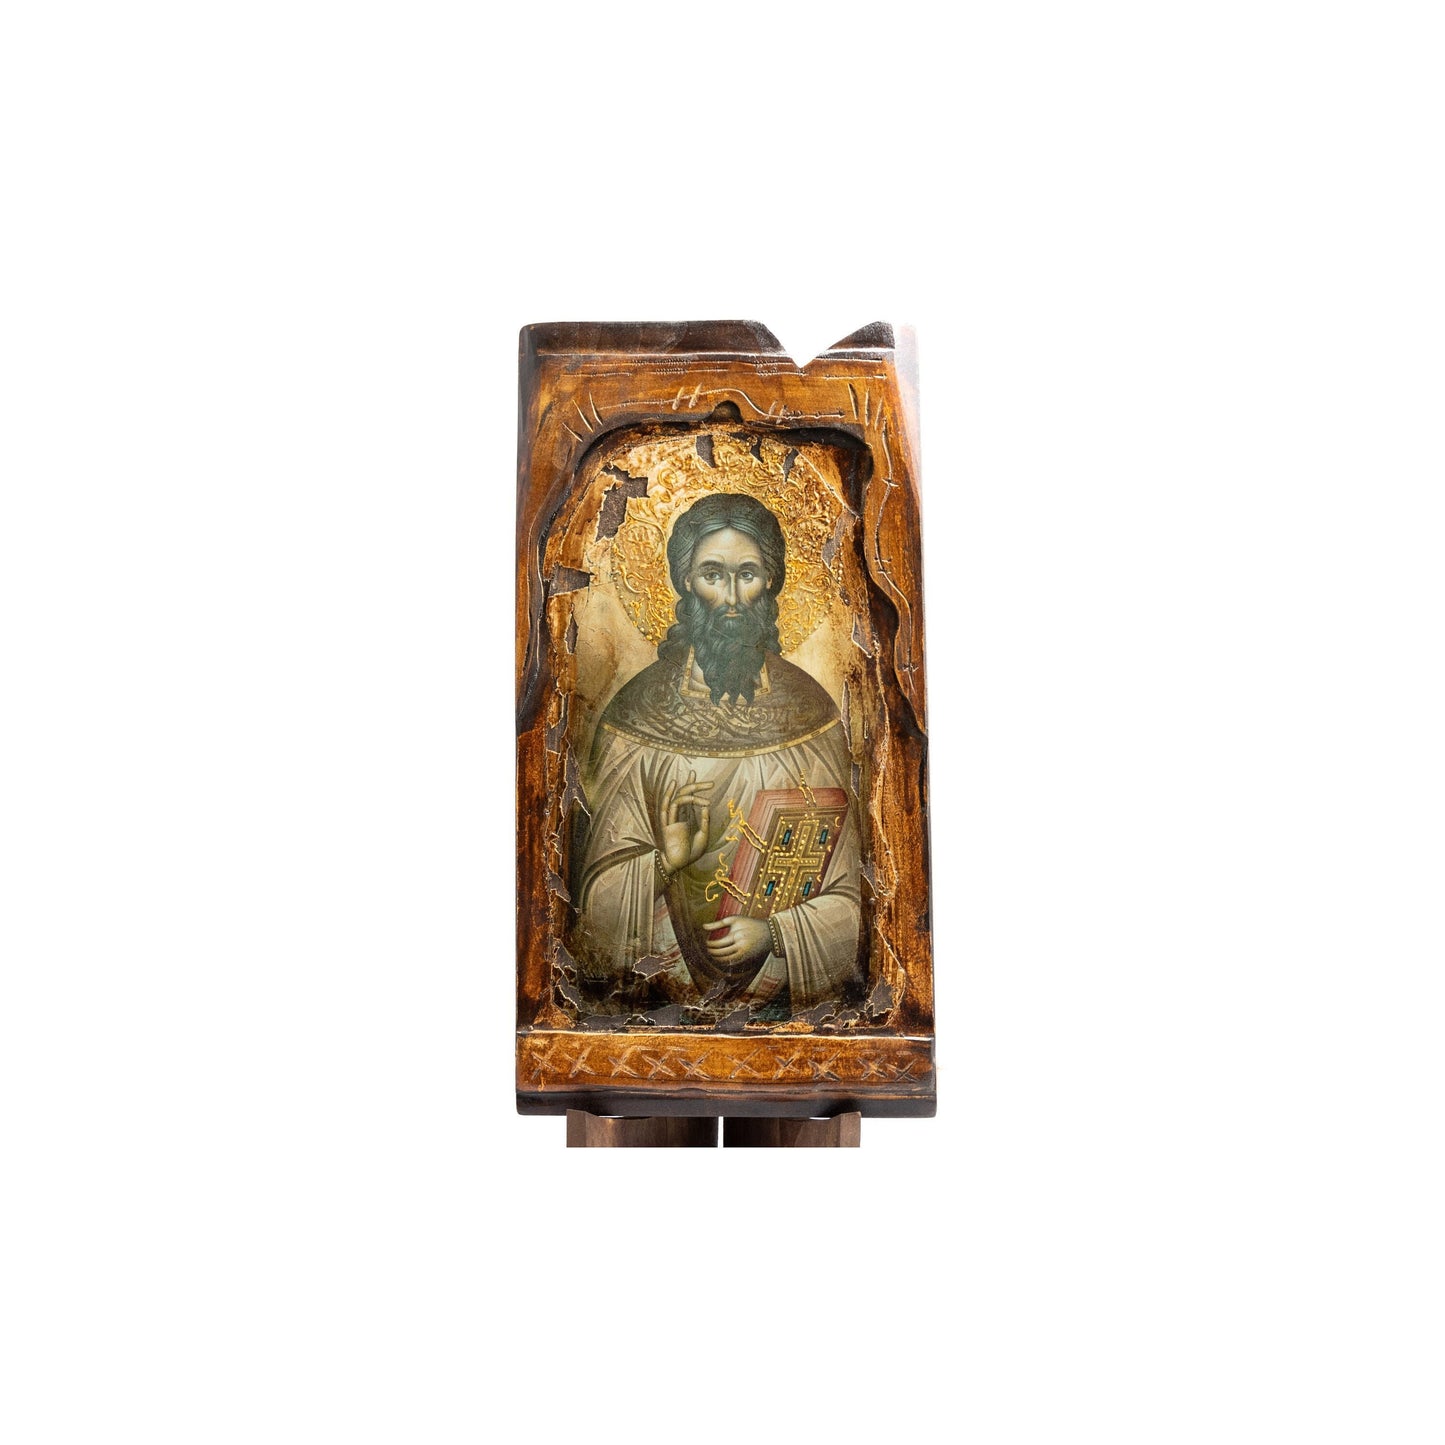 Saint Raphael icon, Handmade Greek Orthodox icon of St Raphael, Byzantine art wall hanging canvas icon wood plaque 51x27cm, wedding gift TheHolyArt